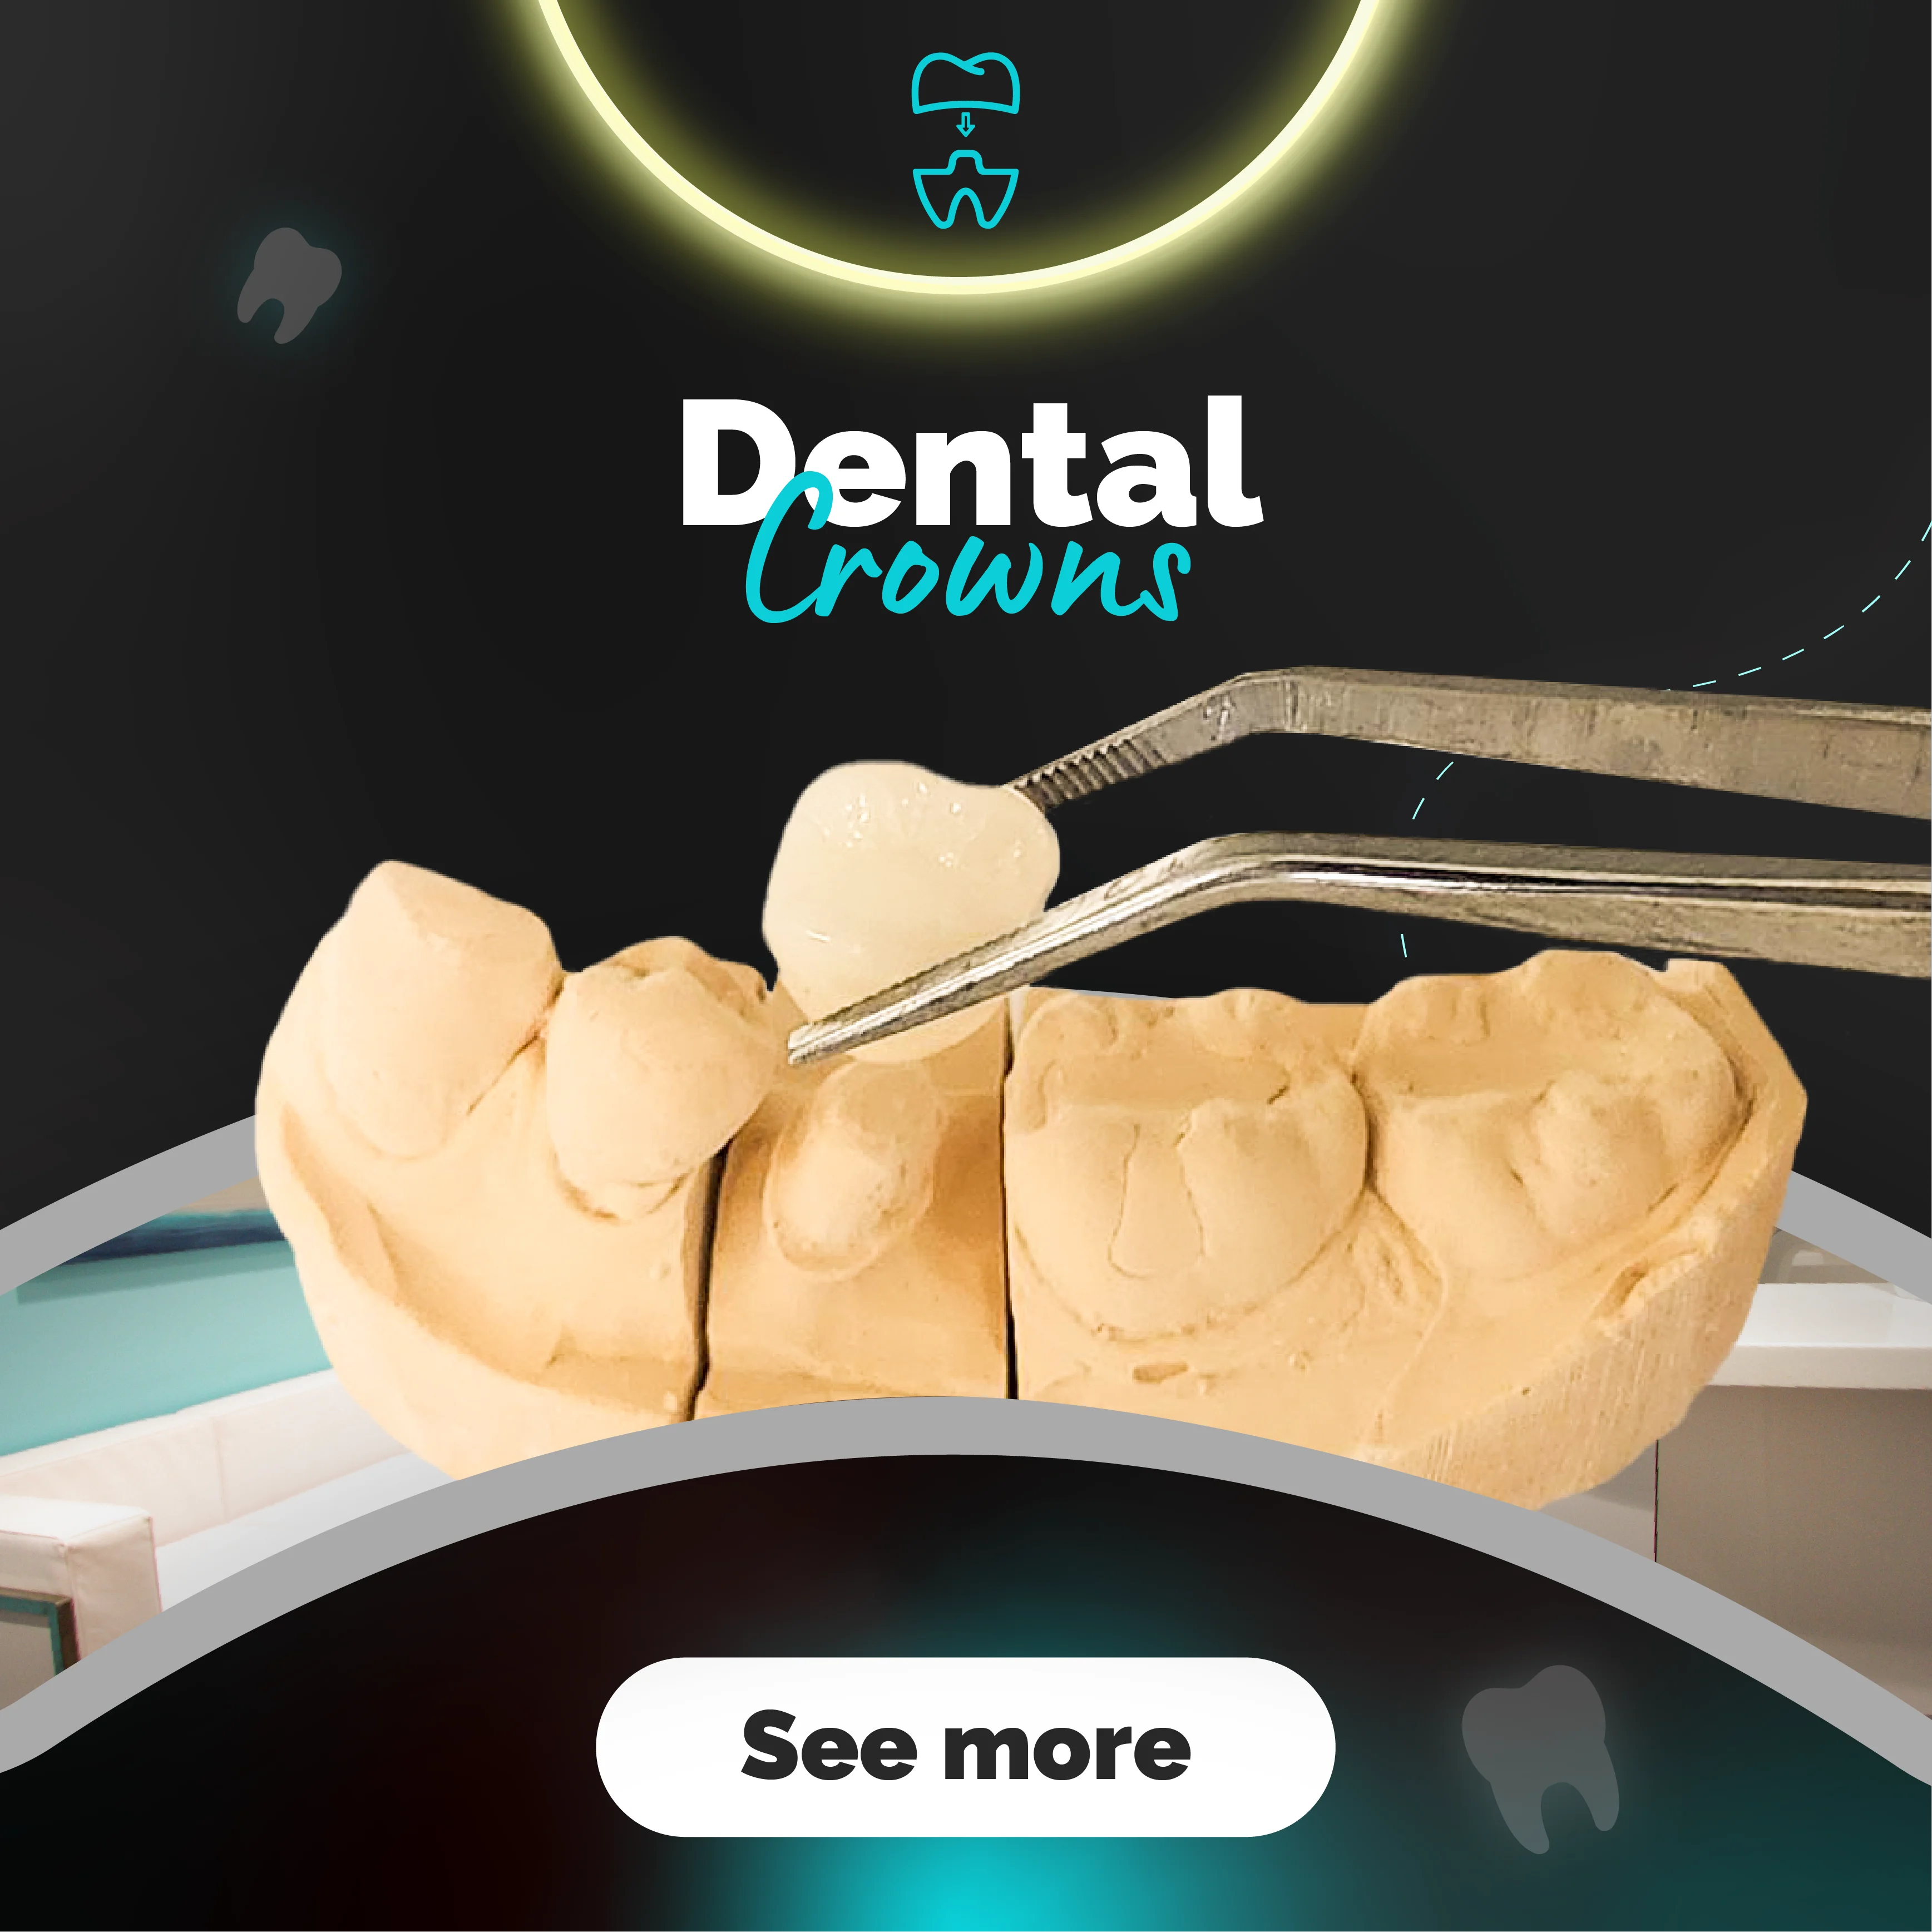 Top Dental